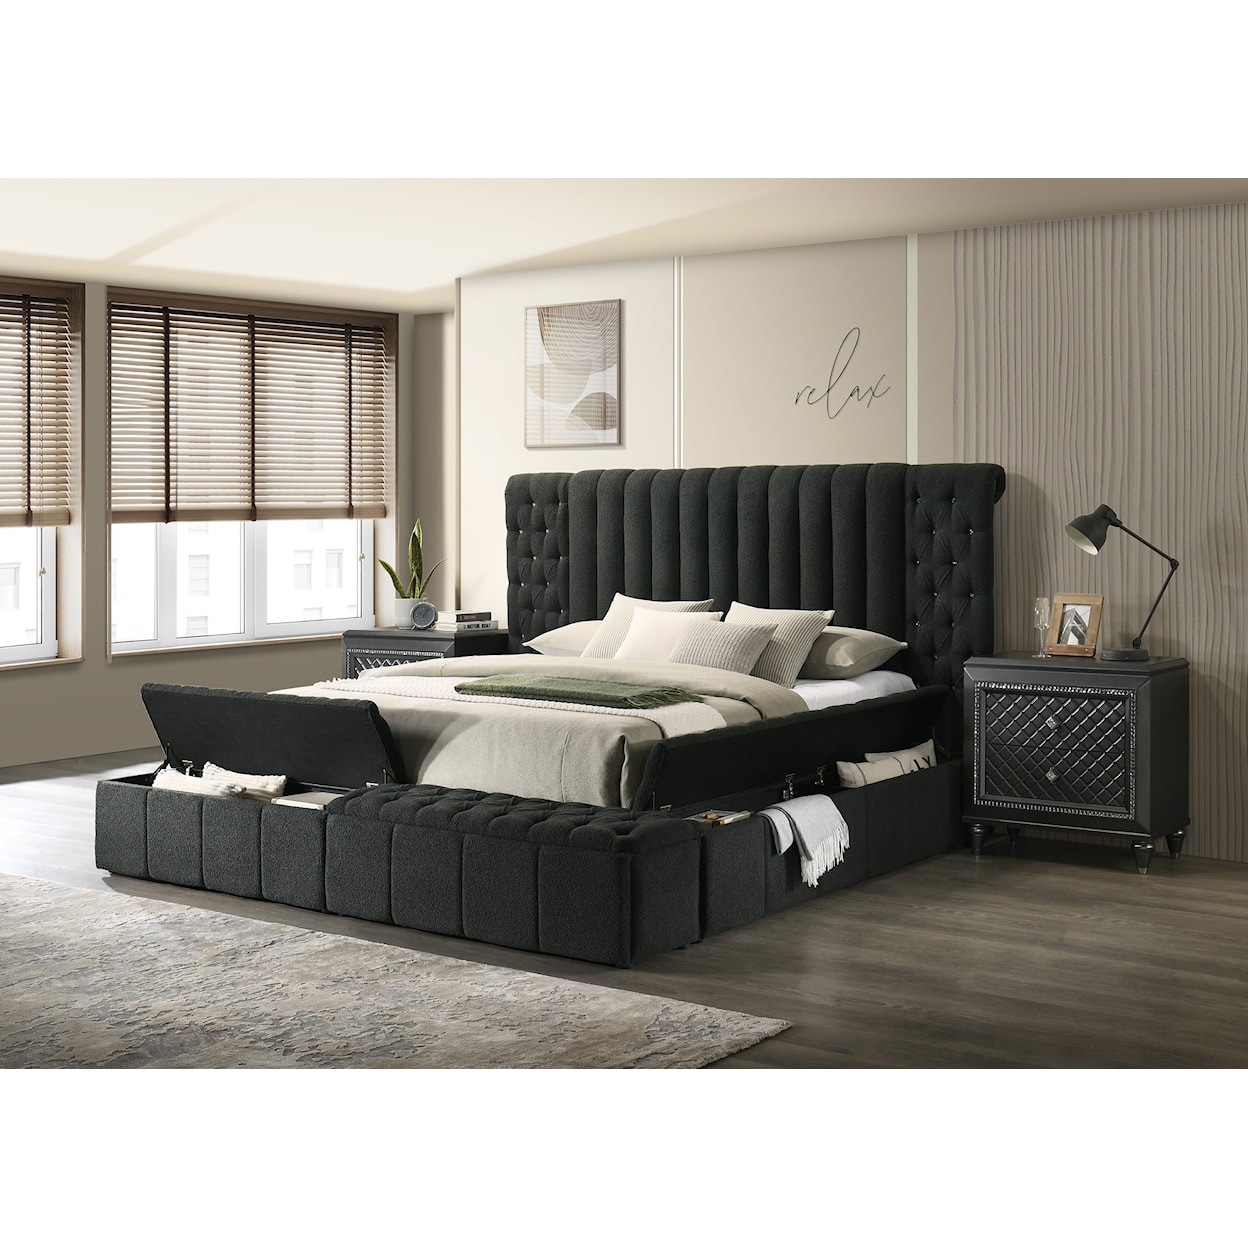 CM DANBURY Upholstered Storage Bed - King